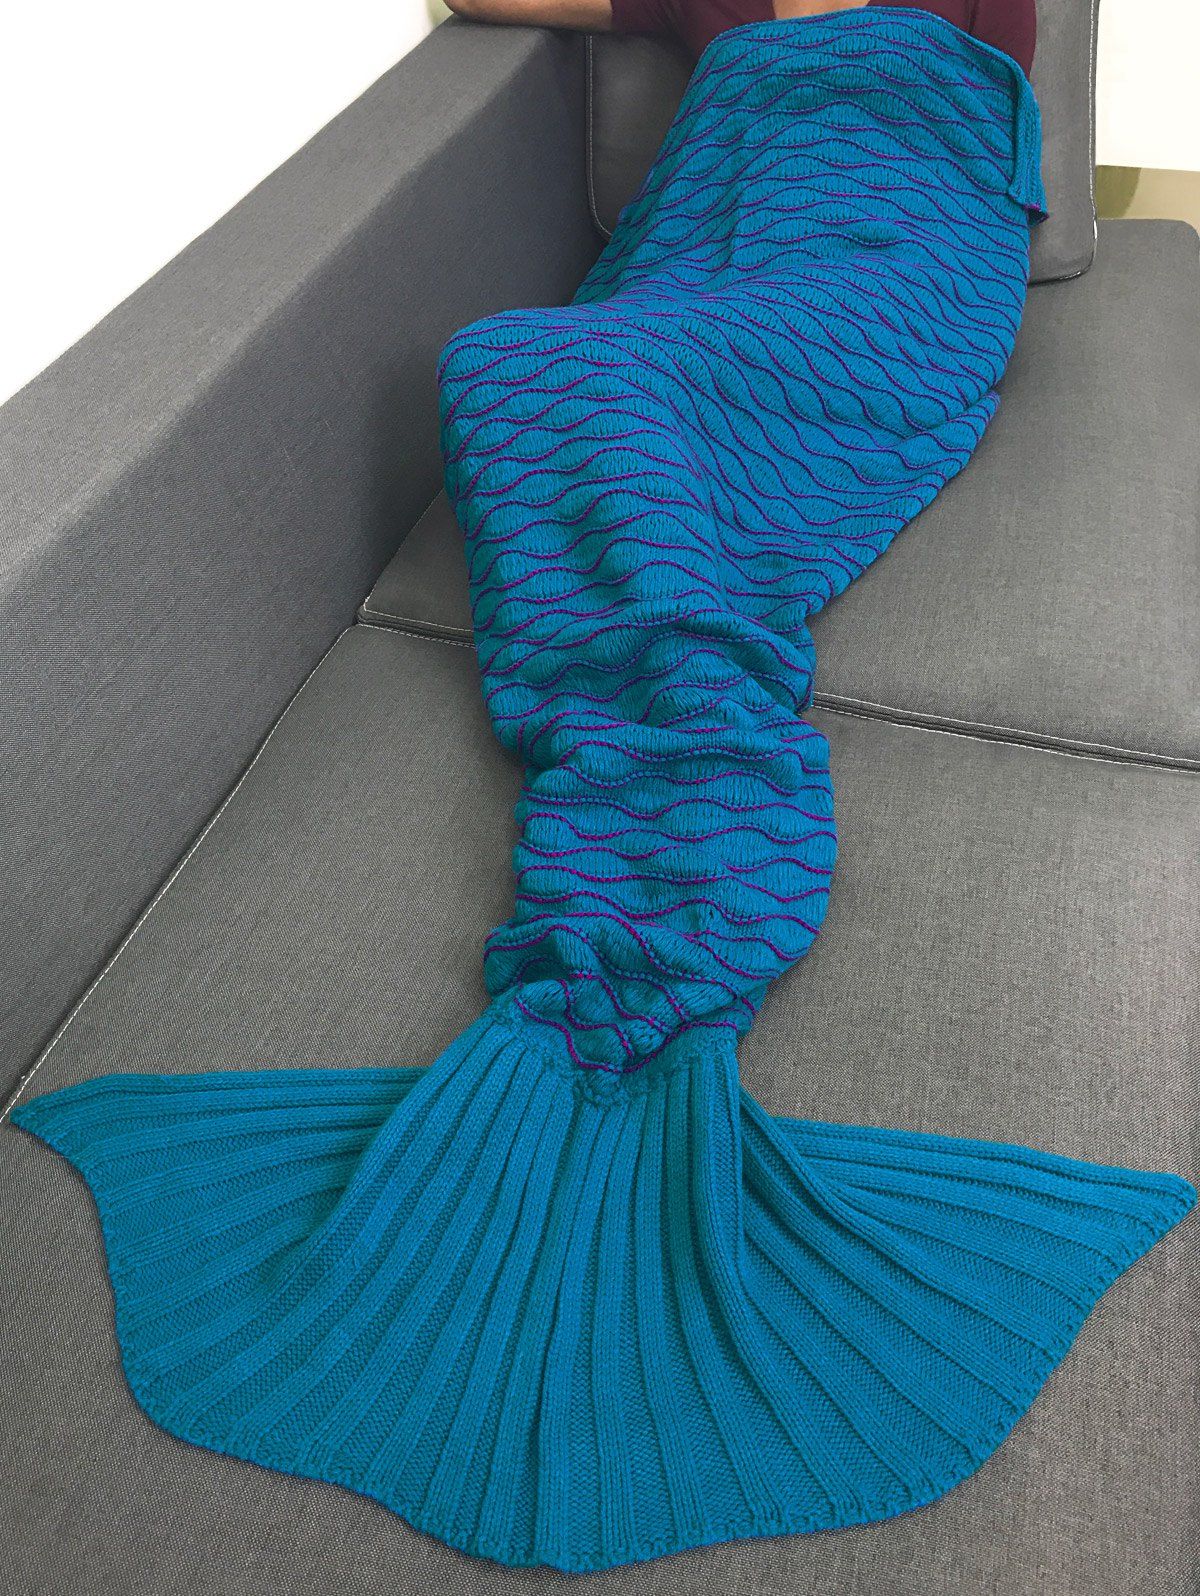 New Knitting Striped Mermaid Tail Blanket  